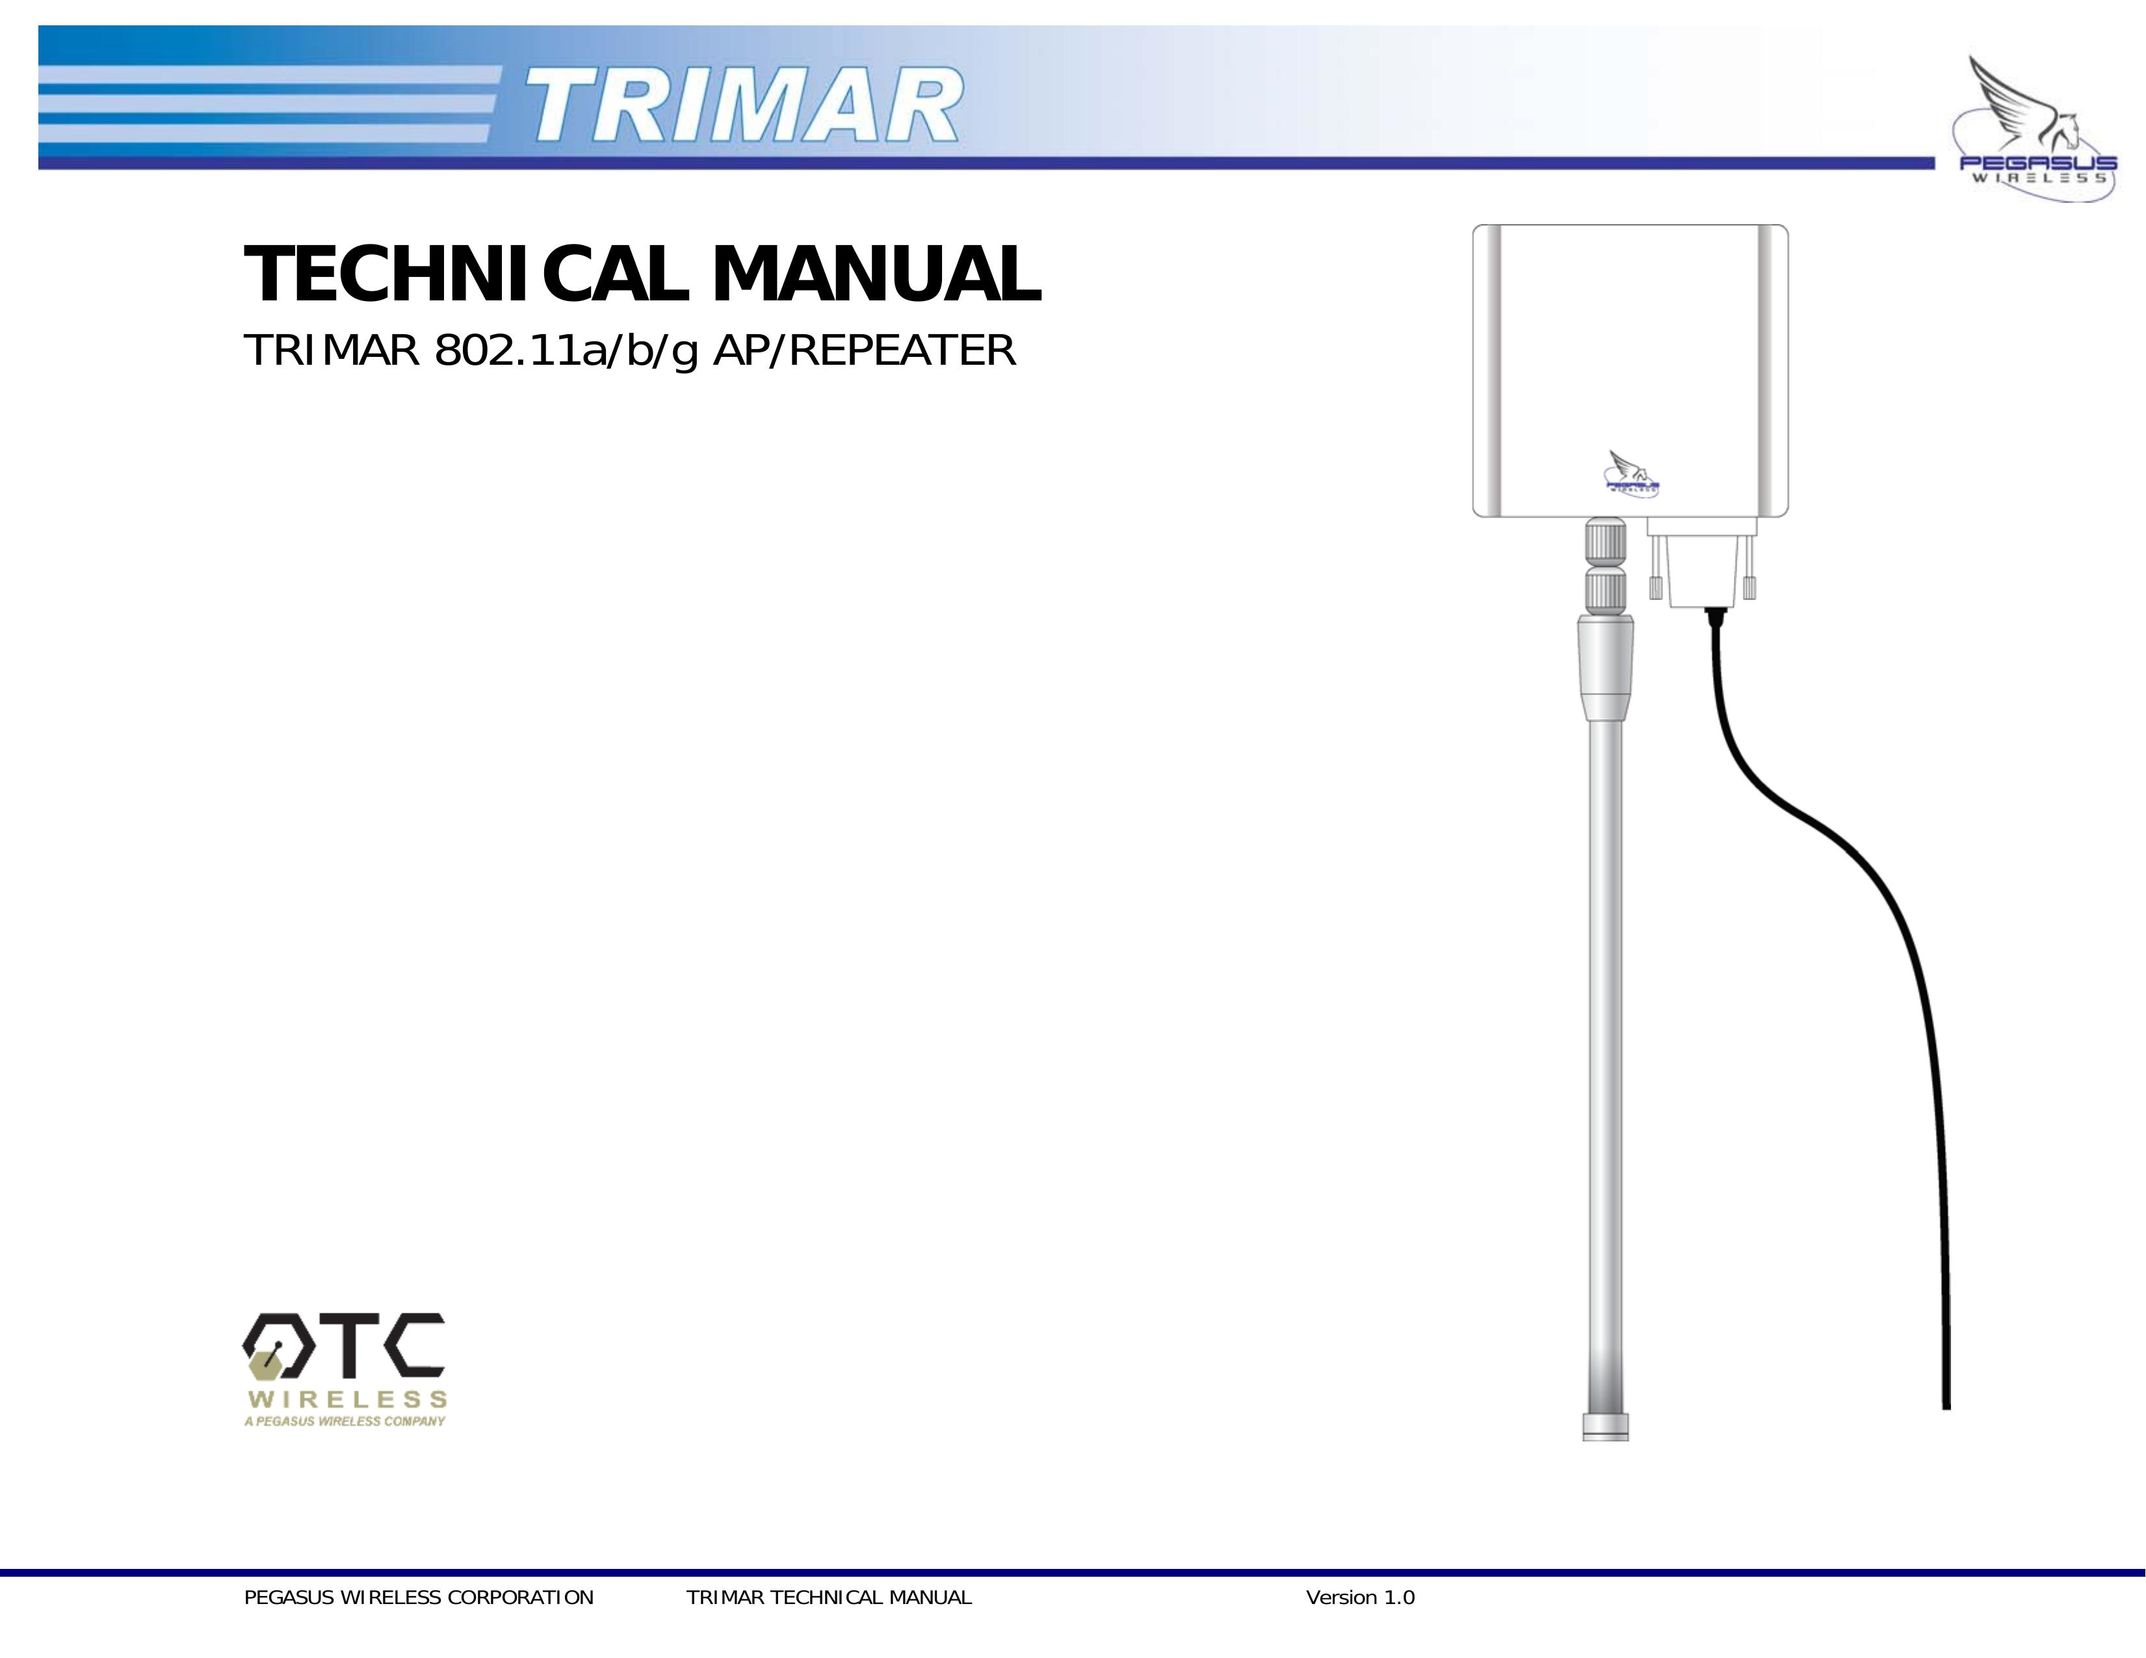 OTC Wireless TRIMAR Network Card User Manual